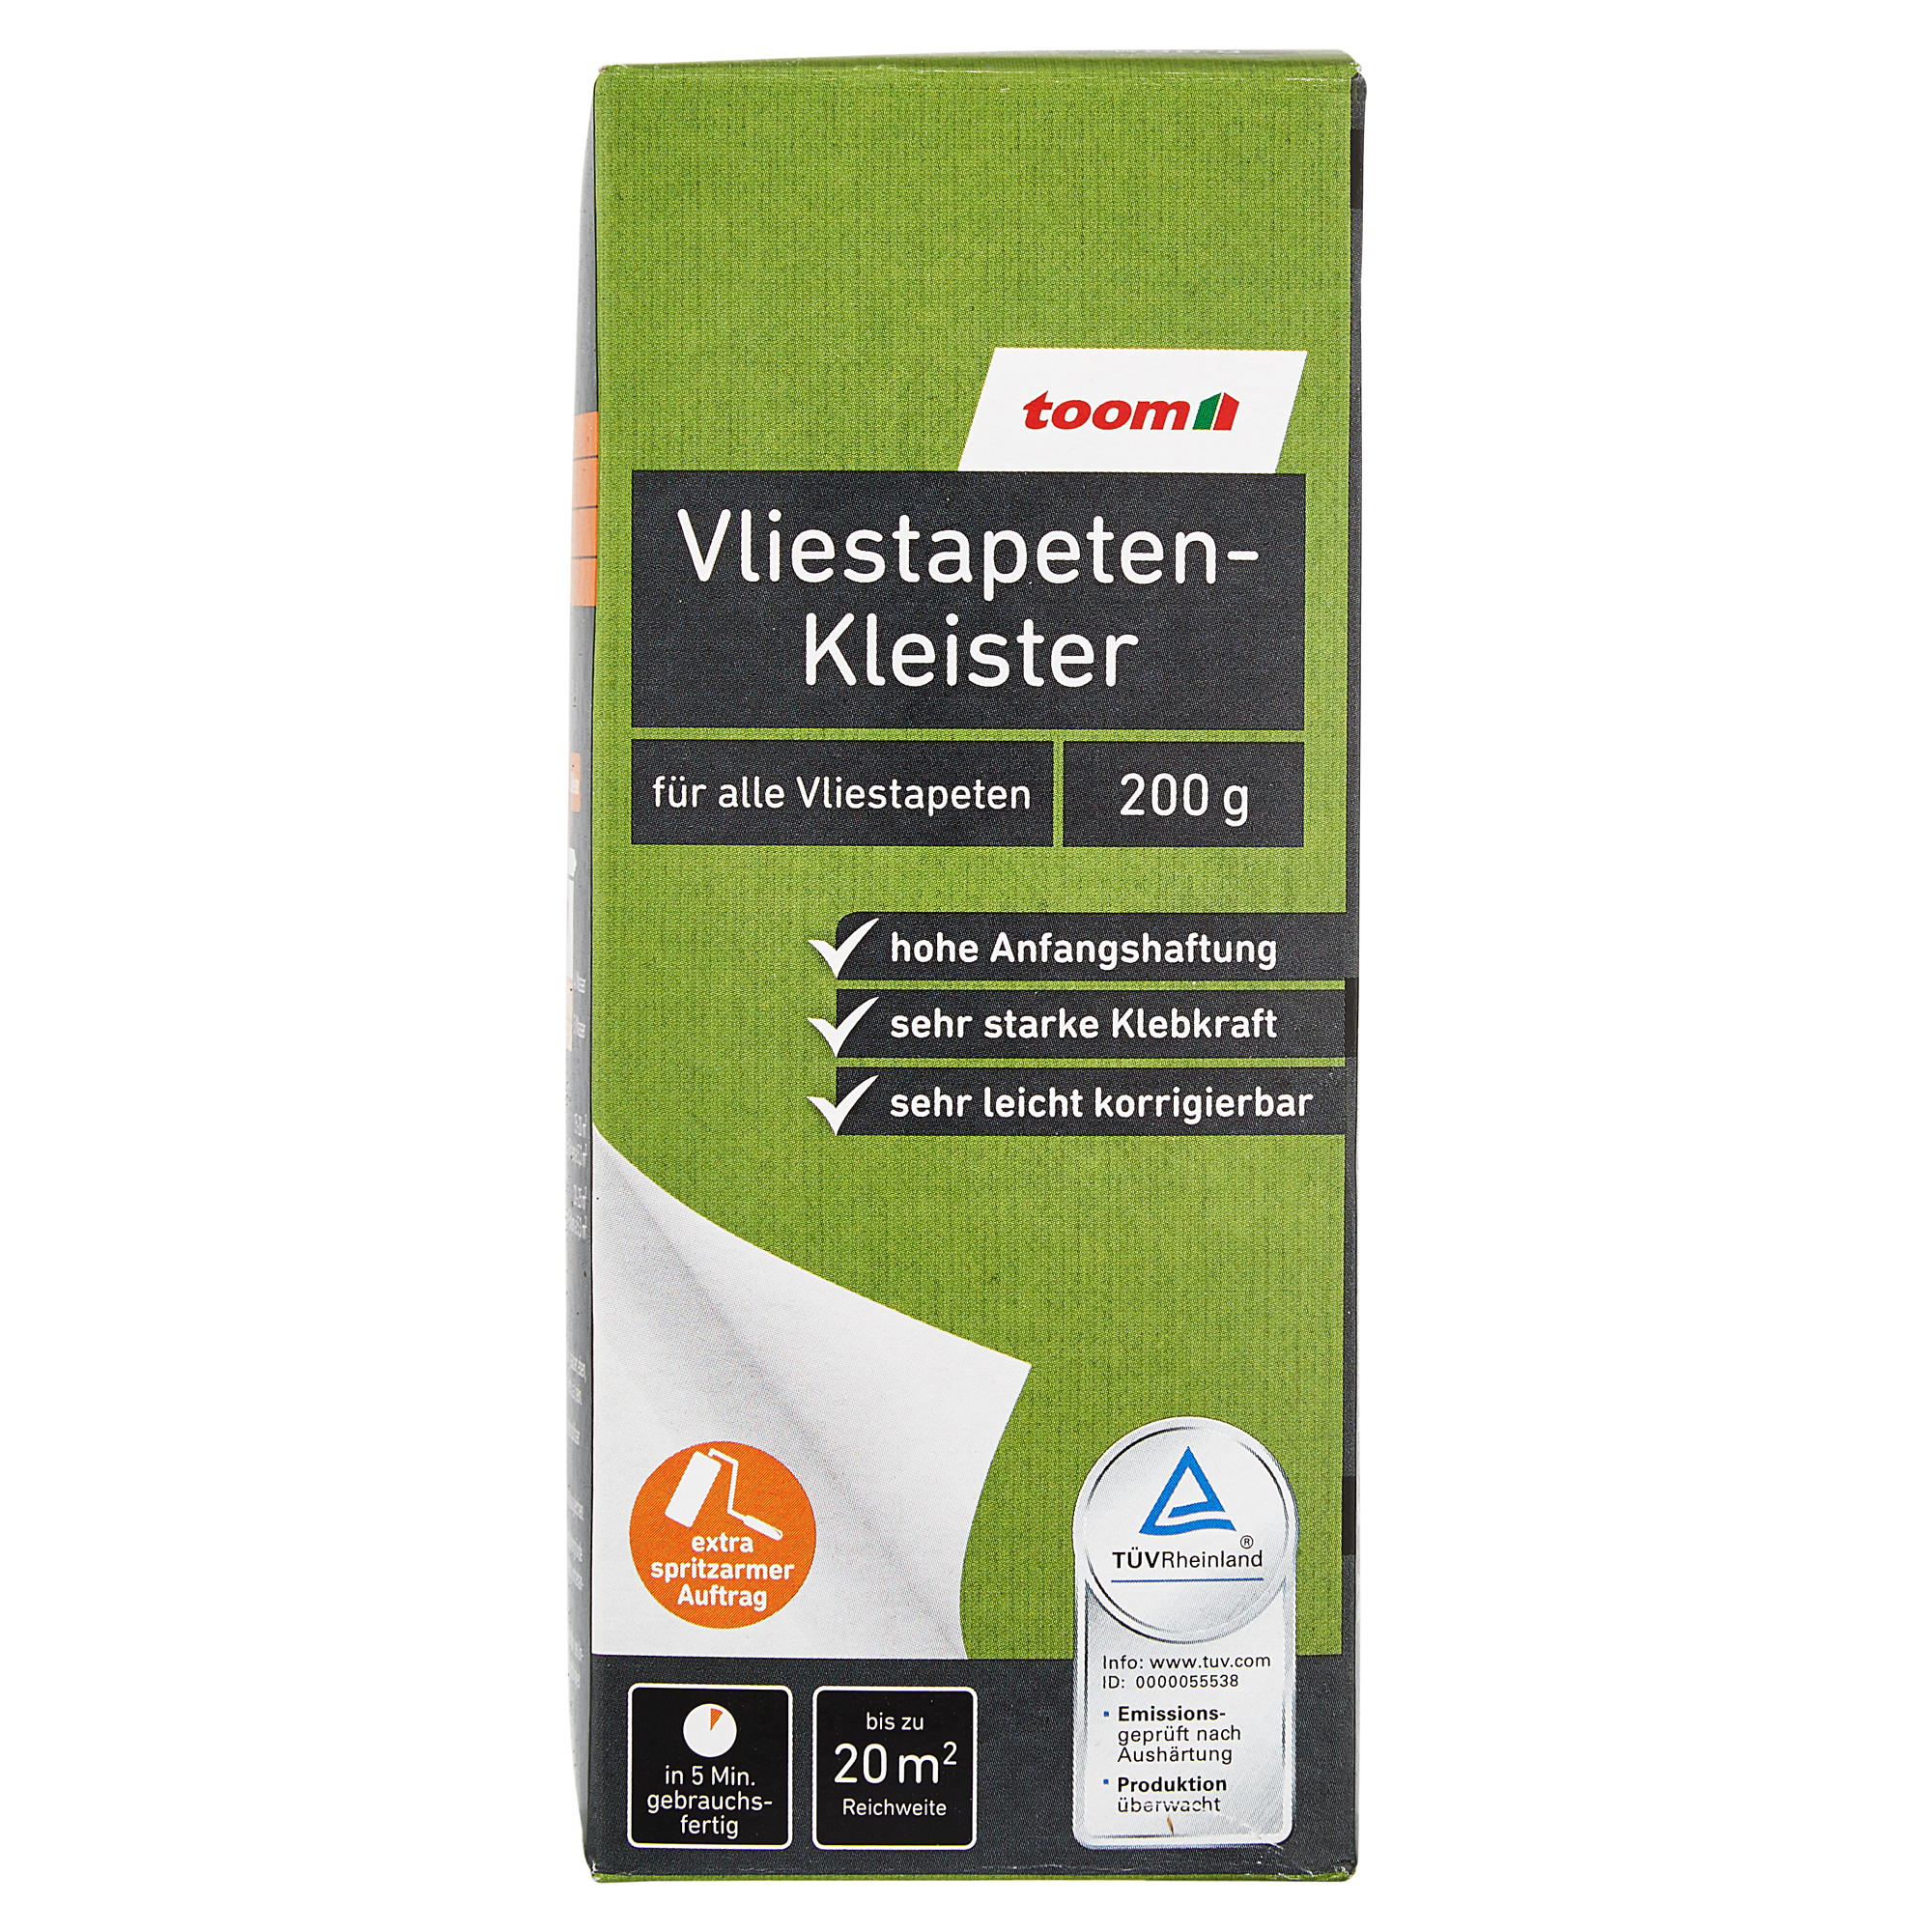 Vliestapeten-Kleister 200 g + product picture